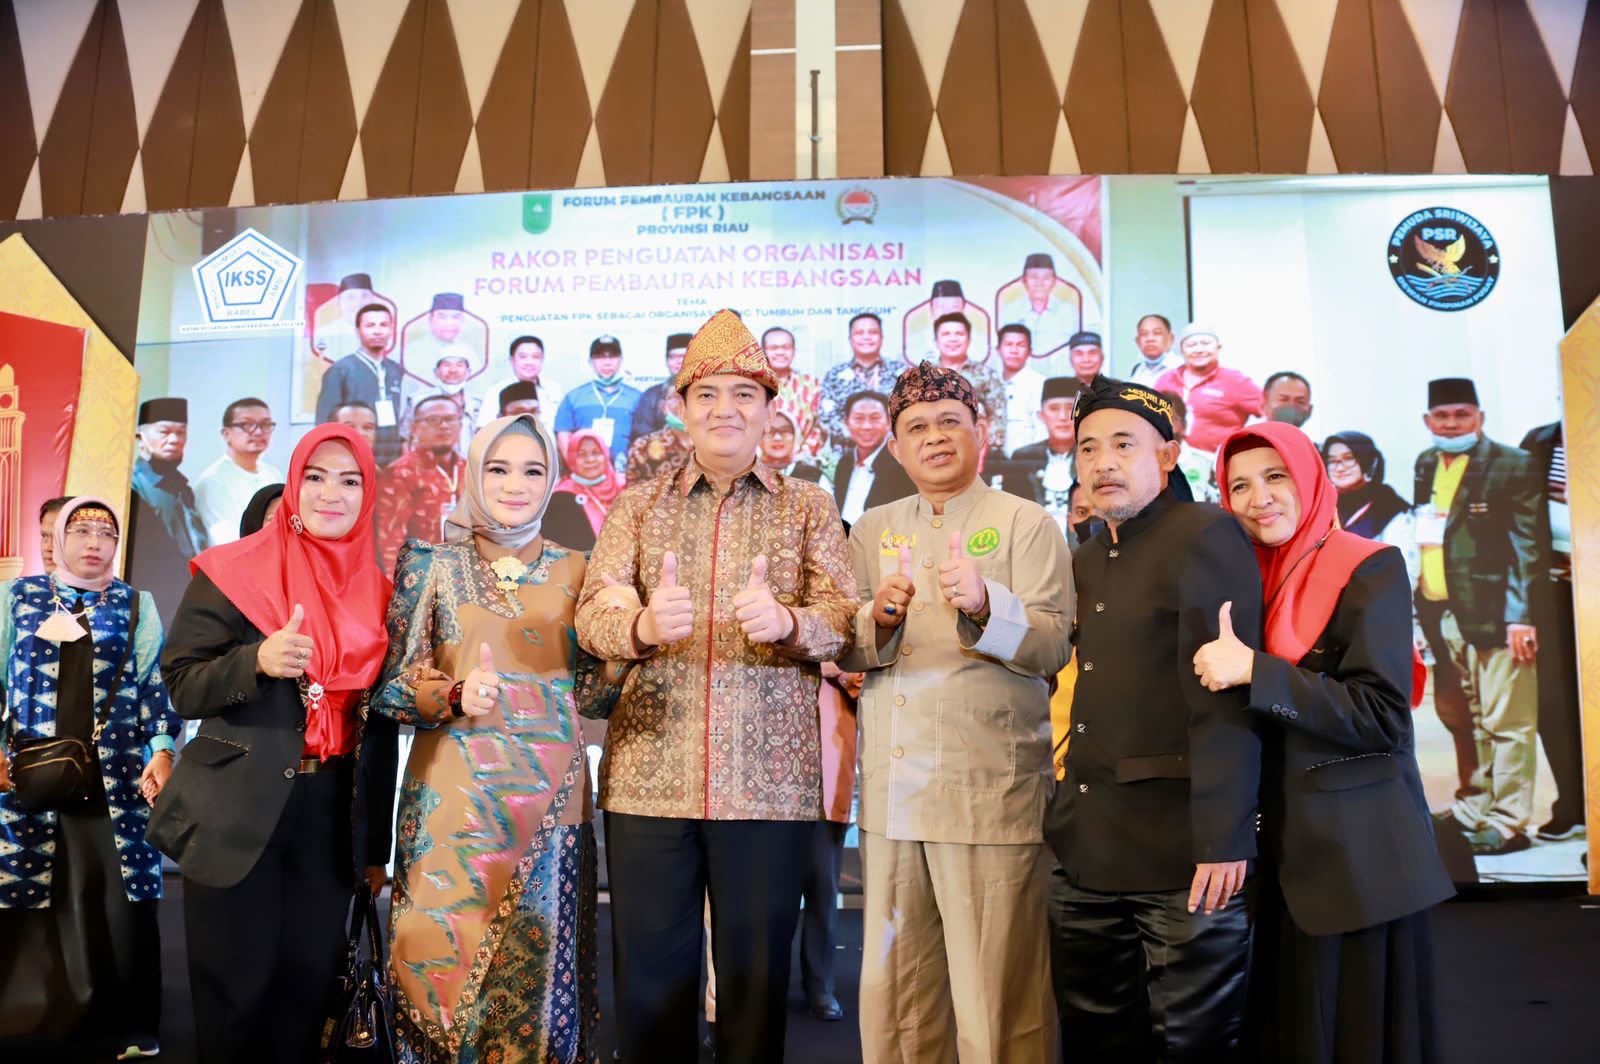 Kapolda Ajak Keluarga Besar IKSS Dukung Program Riau Unggul